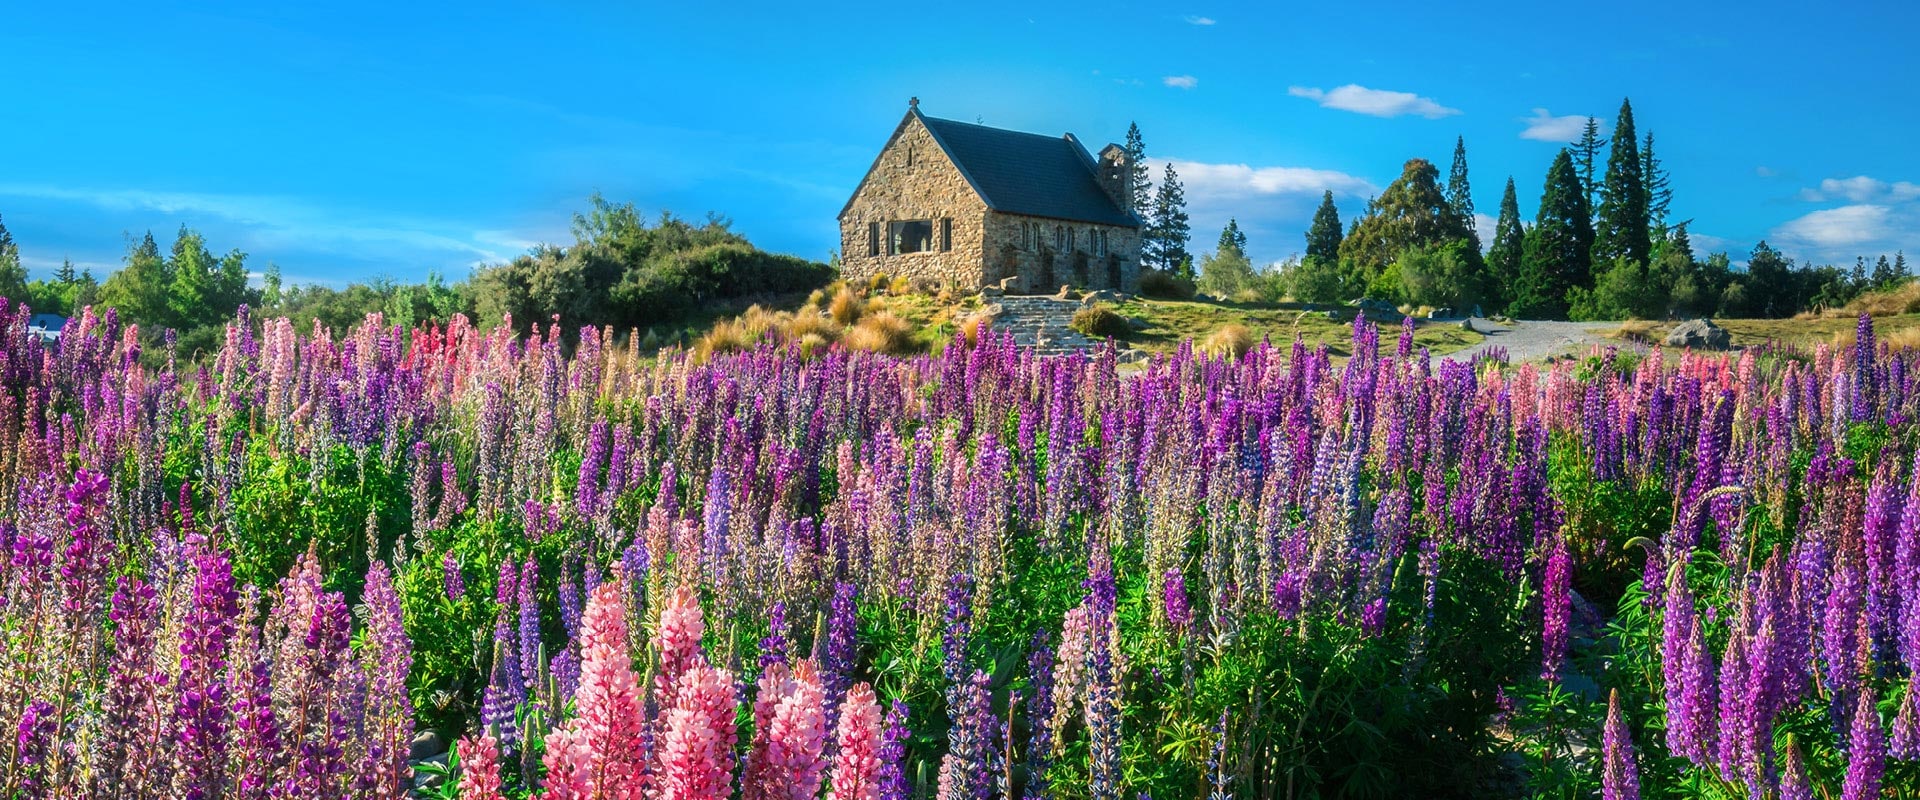 Church of the Good Shepherd and Lupine field at lake Tekapo, New Zealand Copyright (c) 2017 Blue Planet Studio/Shutterstock. 